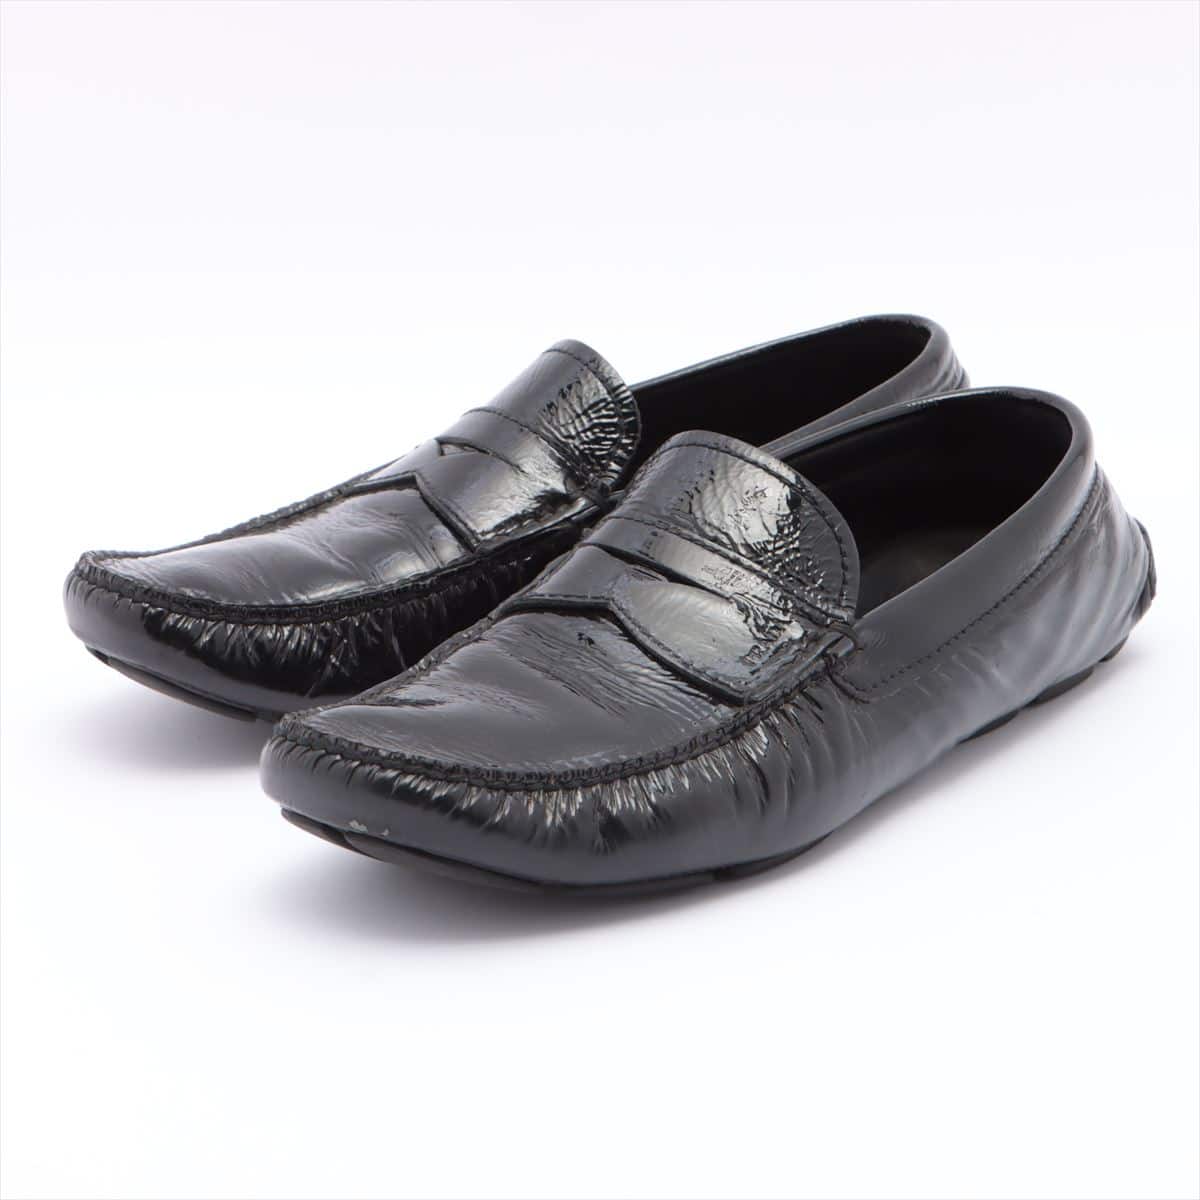 Prada Patent leather Driving shoes 8 1/2 Men's Black